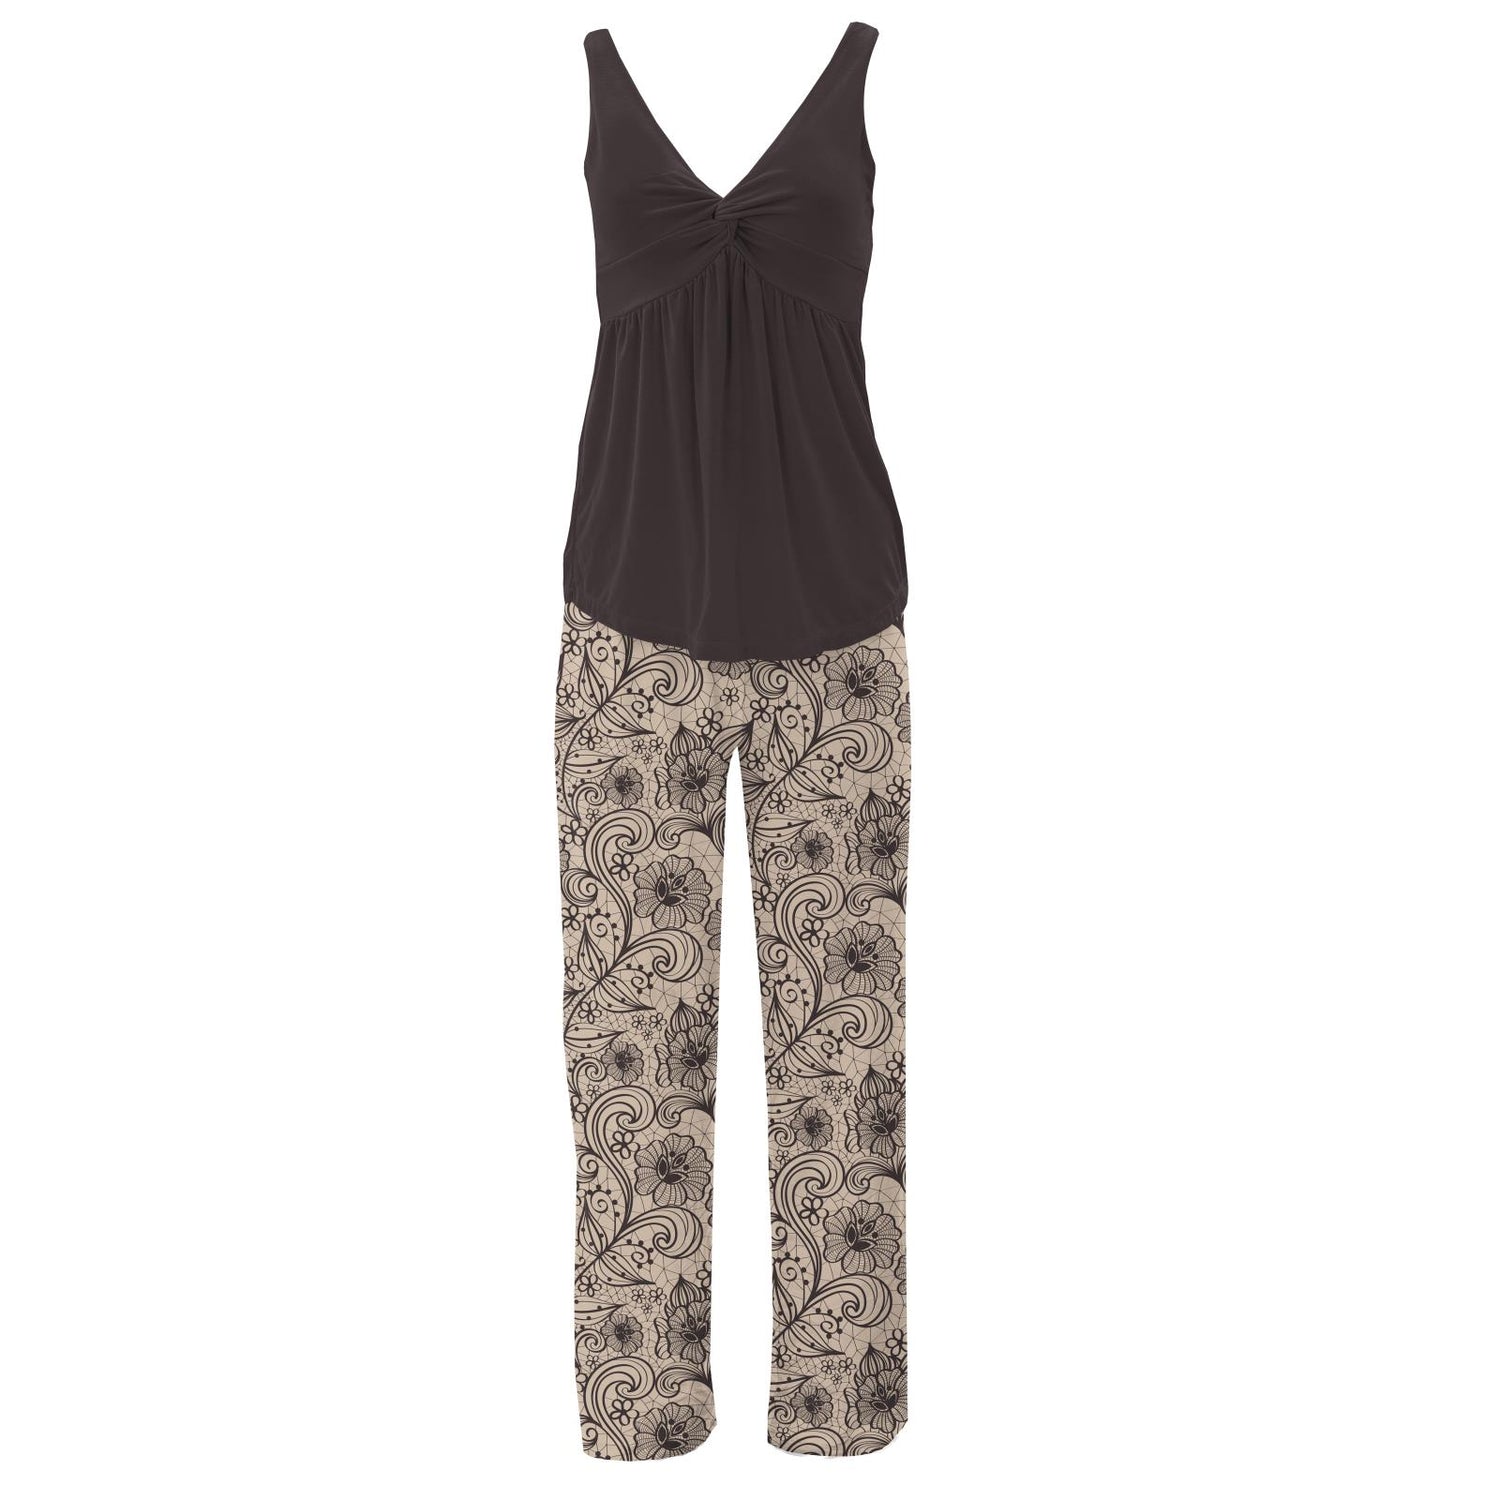 Women's Print Twist Tank and Pajama Pants Set in Burlap Lace